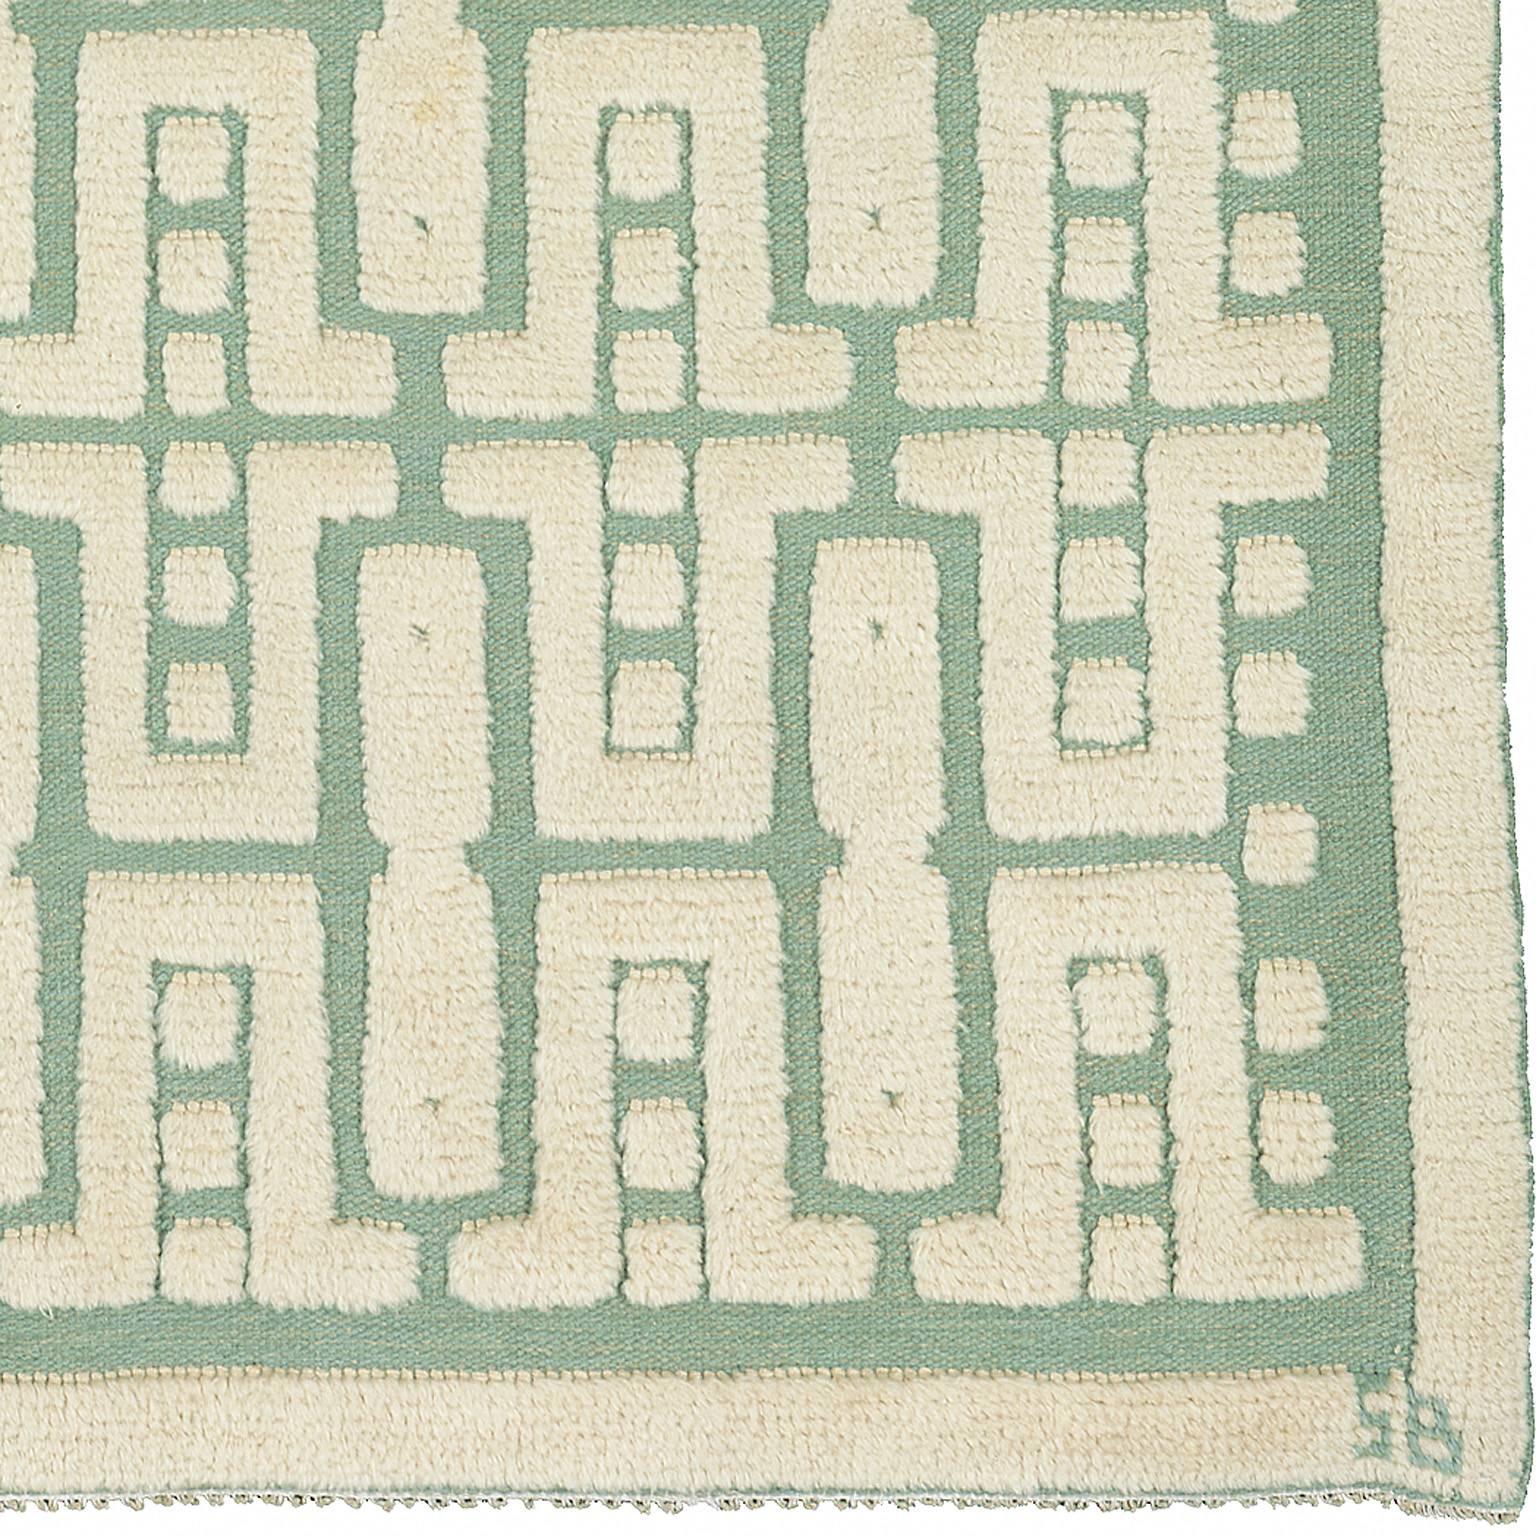 Mid-20th century Swedish pile carpet. Initialed: SB (Sigvard Bernadotte).